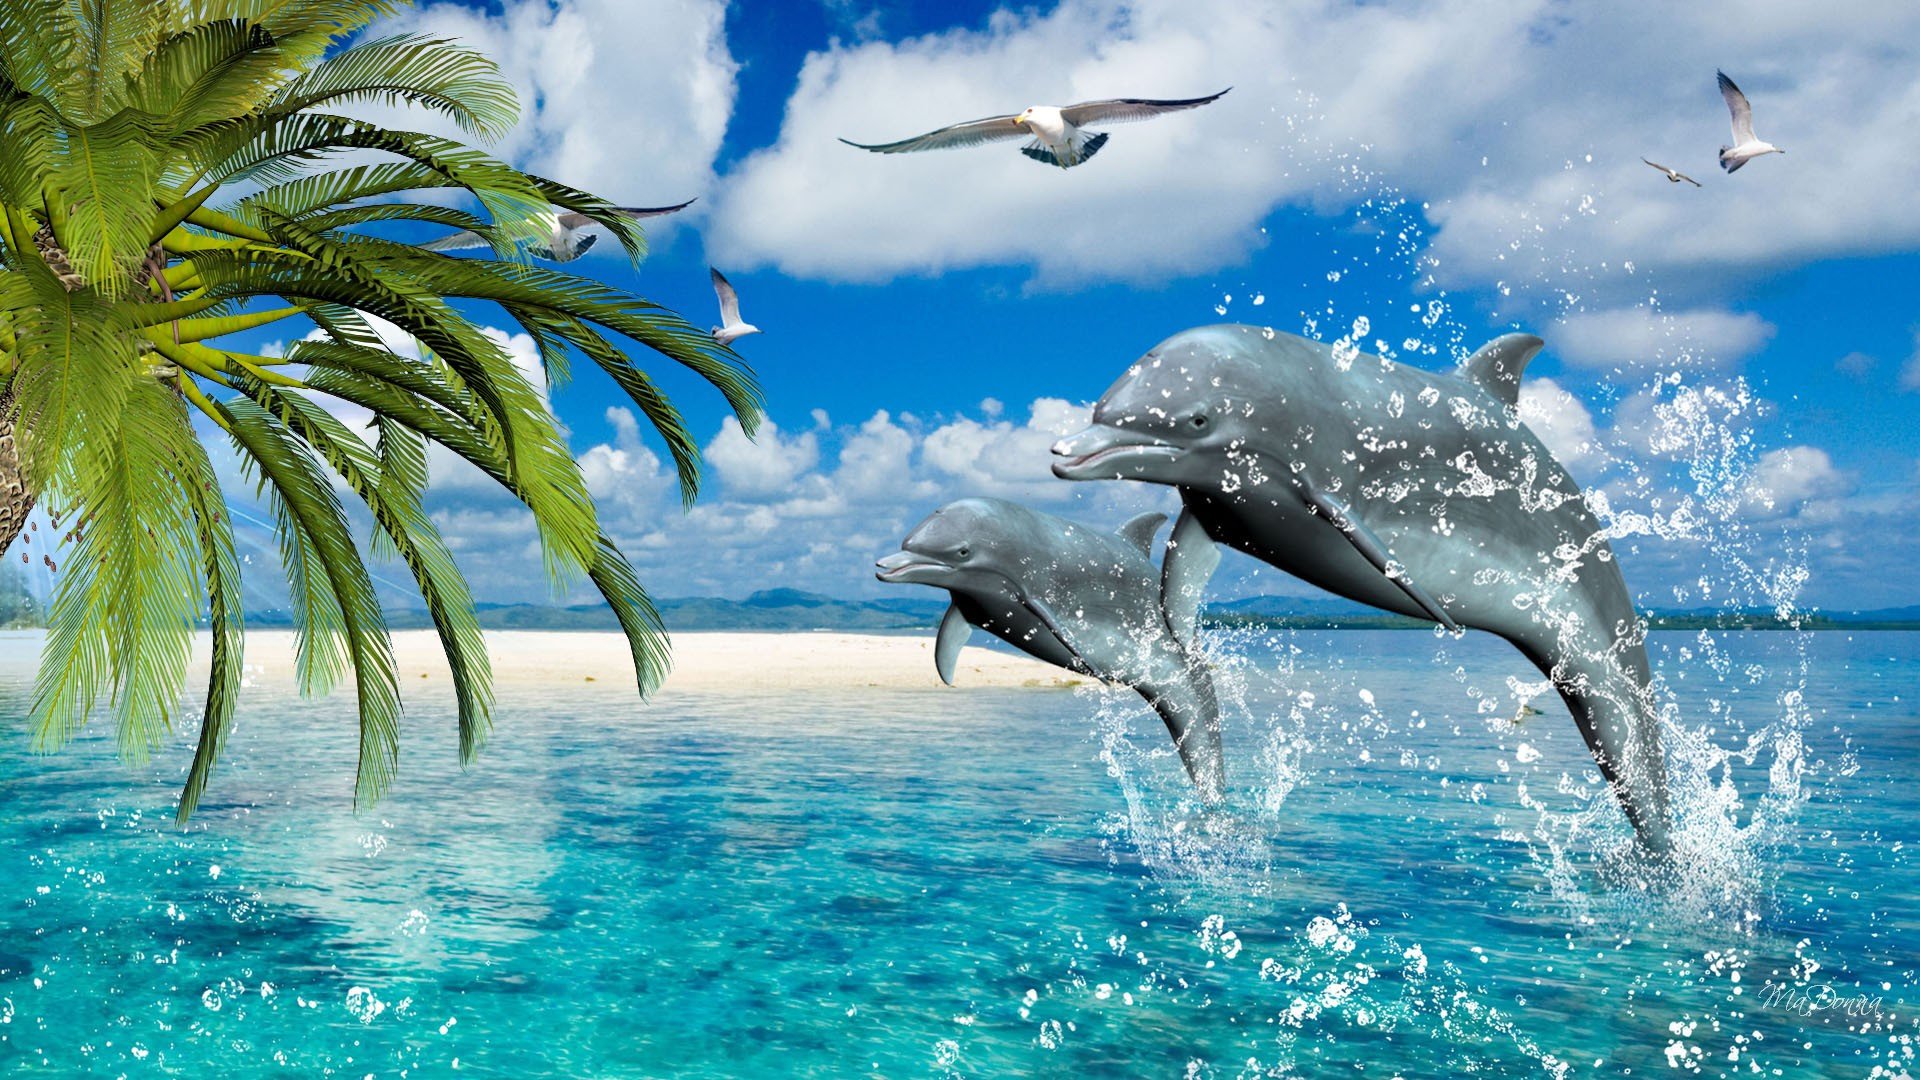 74+] Free Dolphin Wallpapers For Desktop - WallpaperSafari